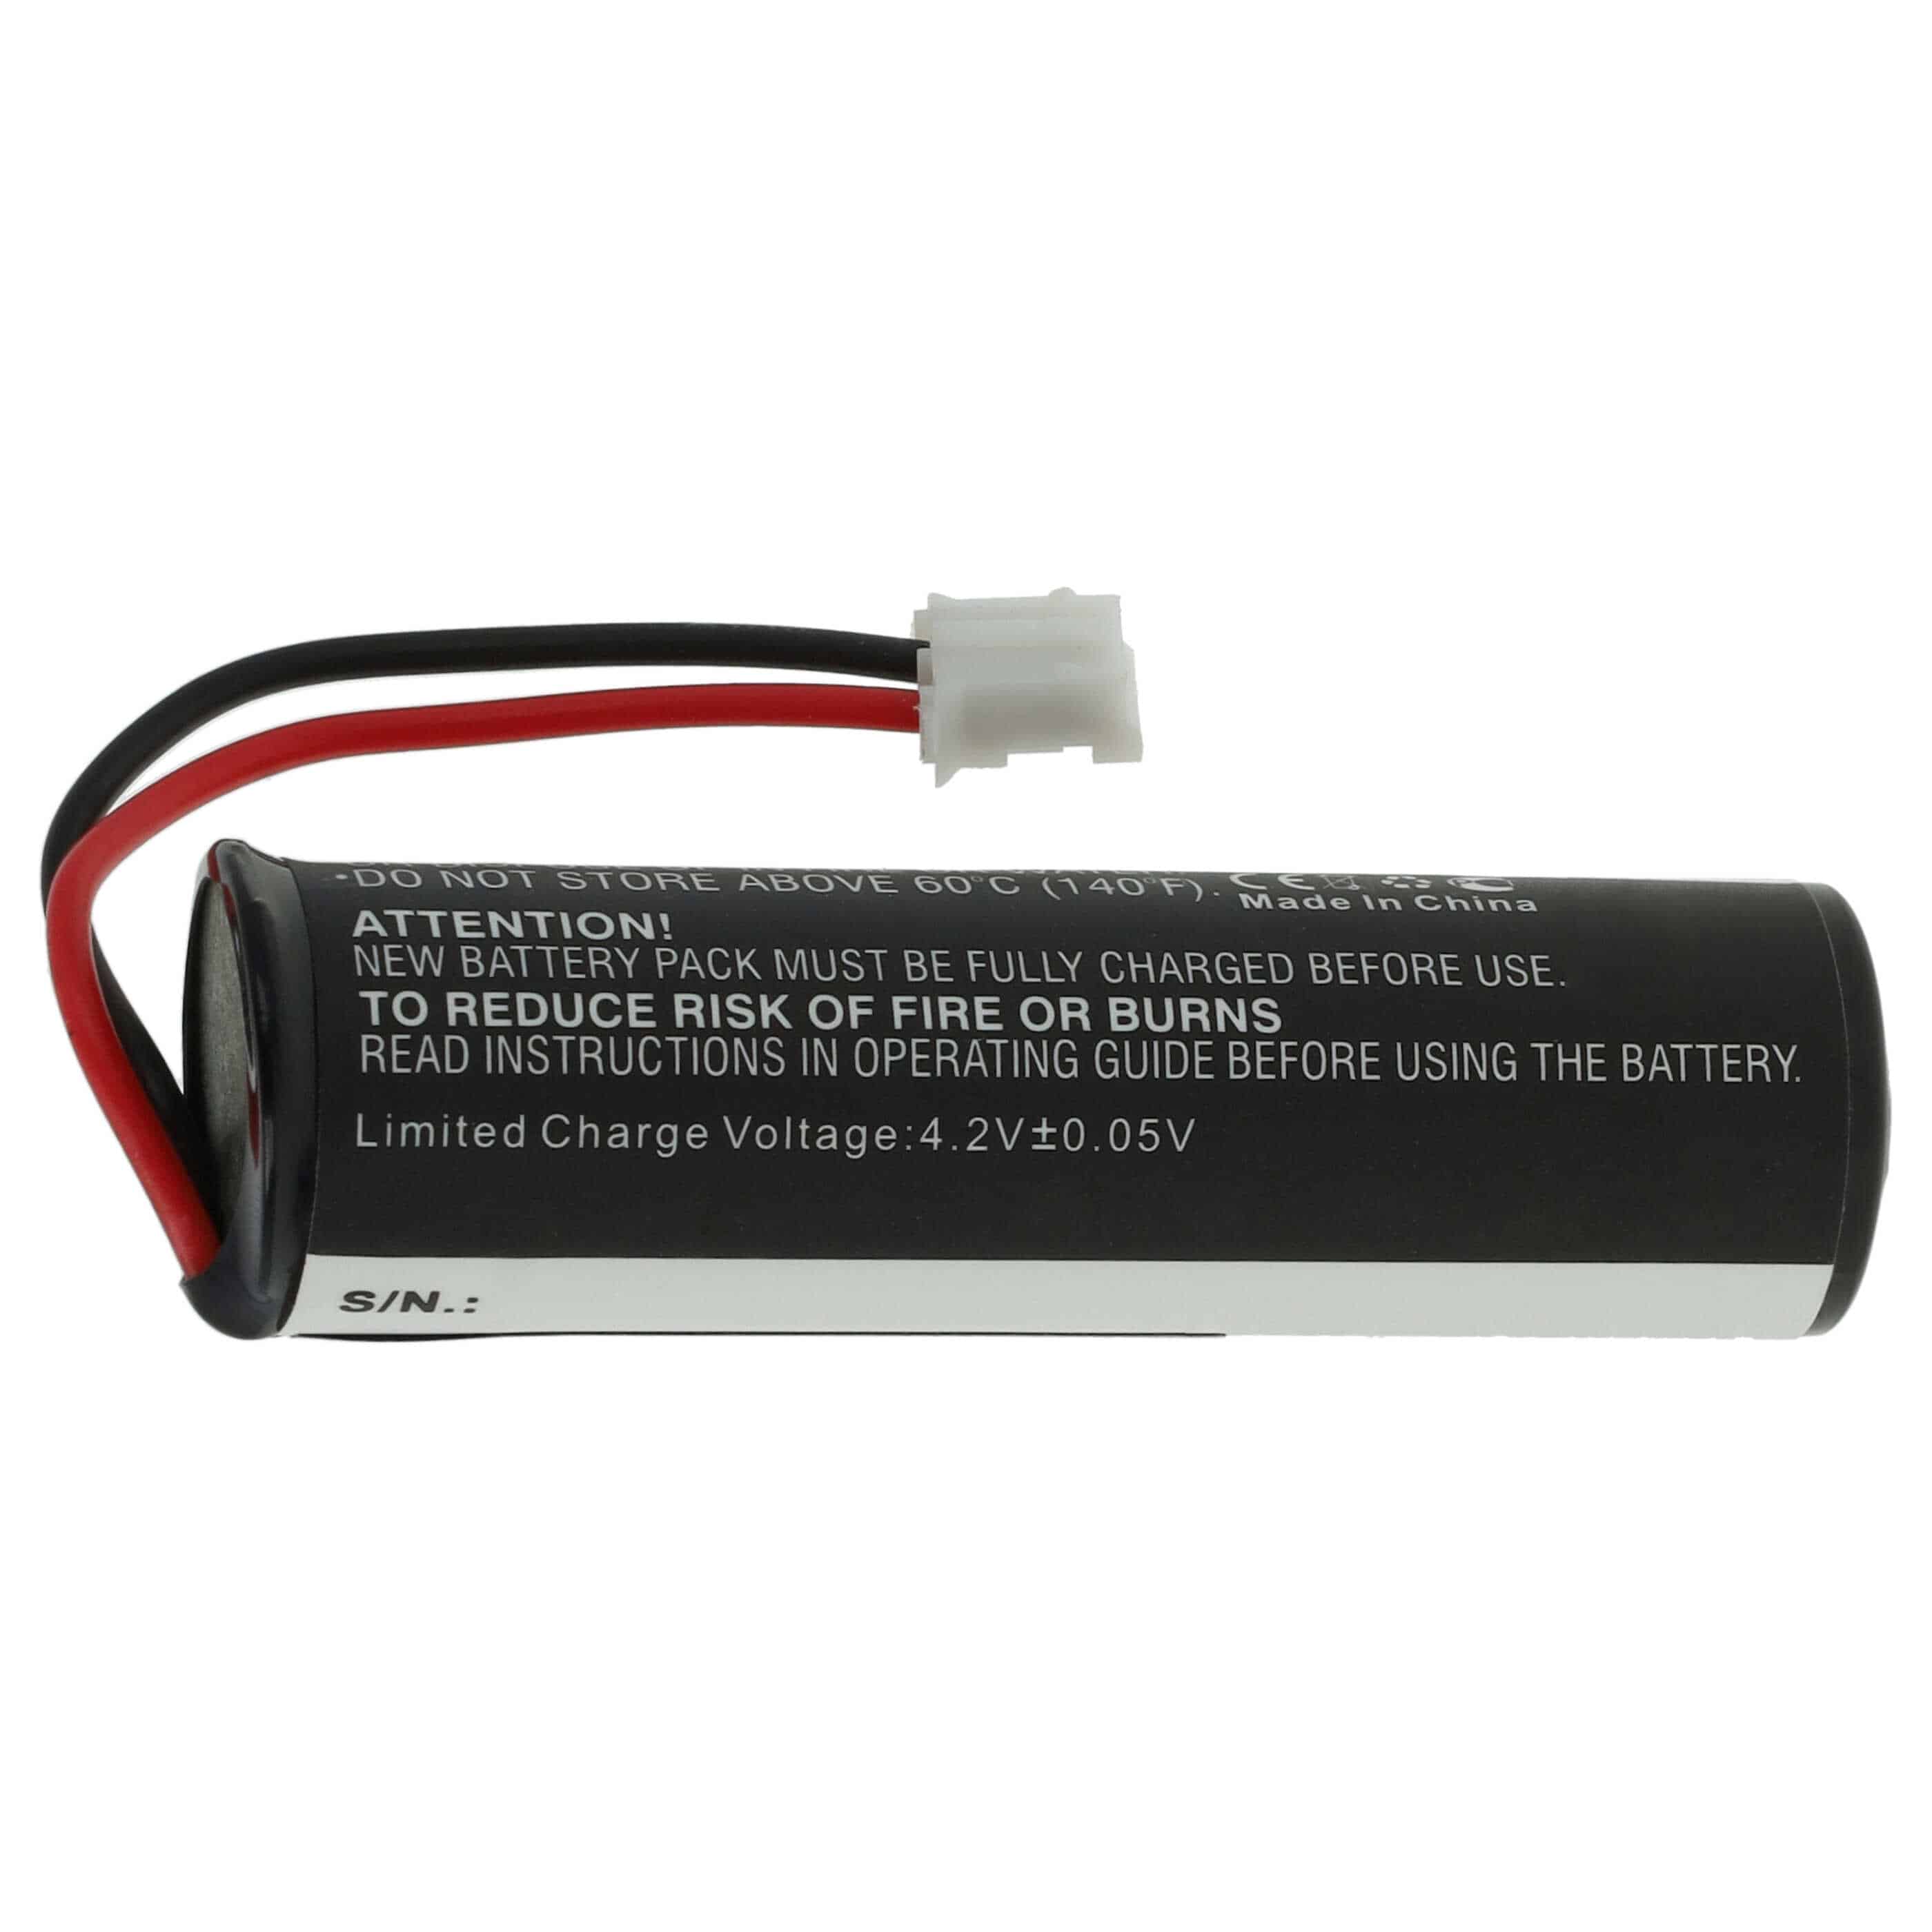 Medical Equipment Battery Replacement for Morita 7505626, 7505628, RB-CB1003 - 800mAh 3.7V Li-Ion